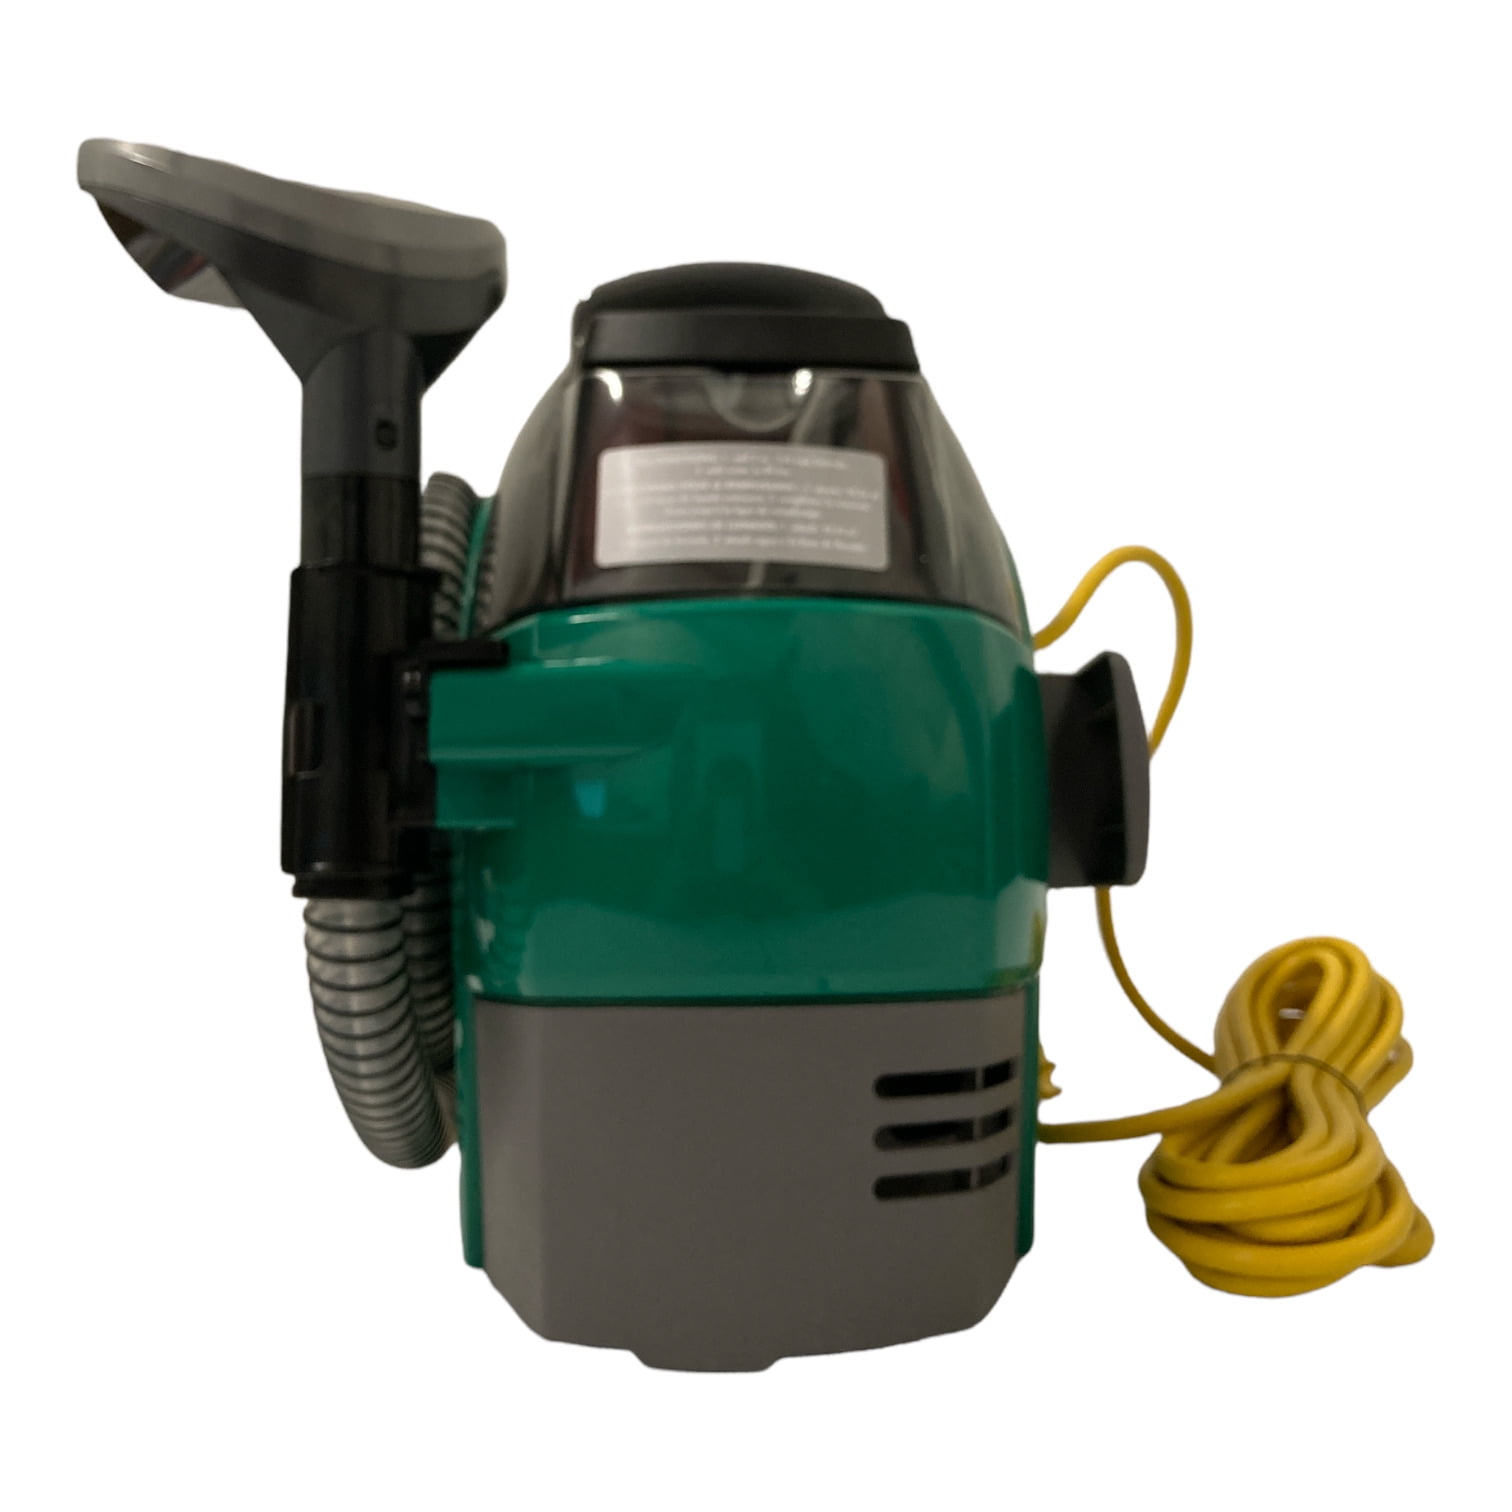 Little Green Pro Portable Deep Cleaner®